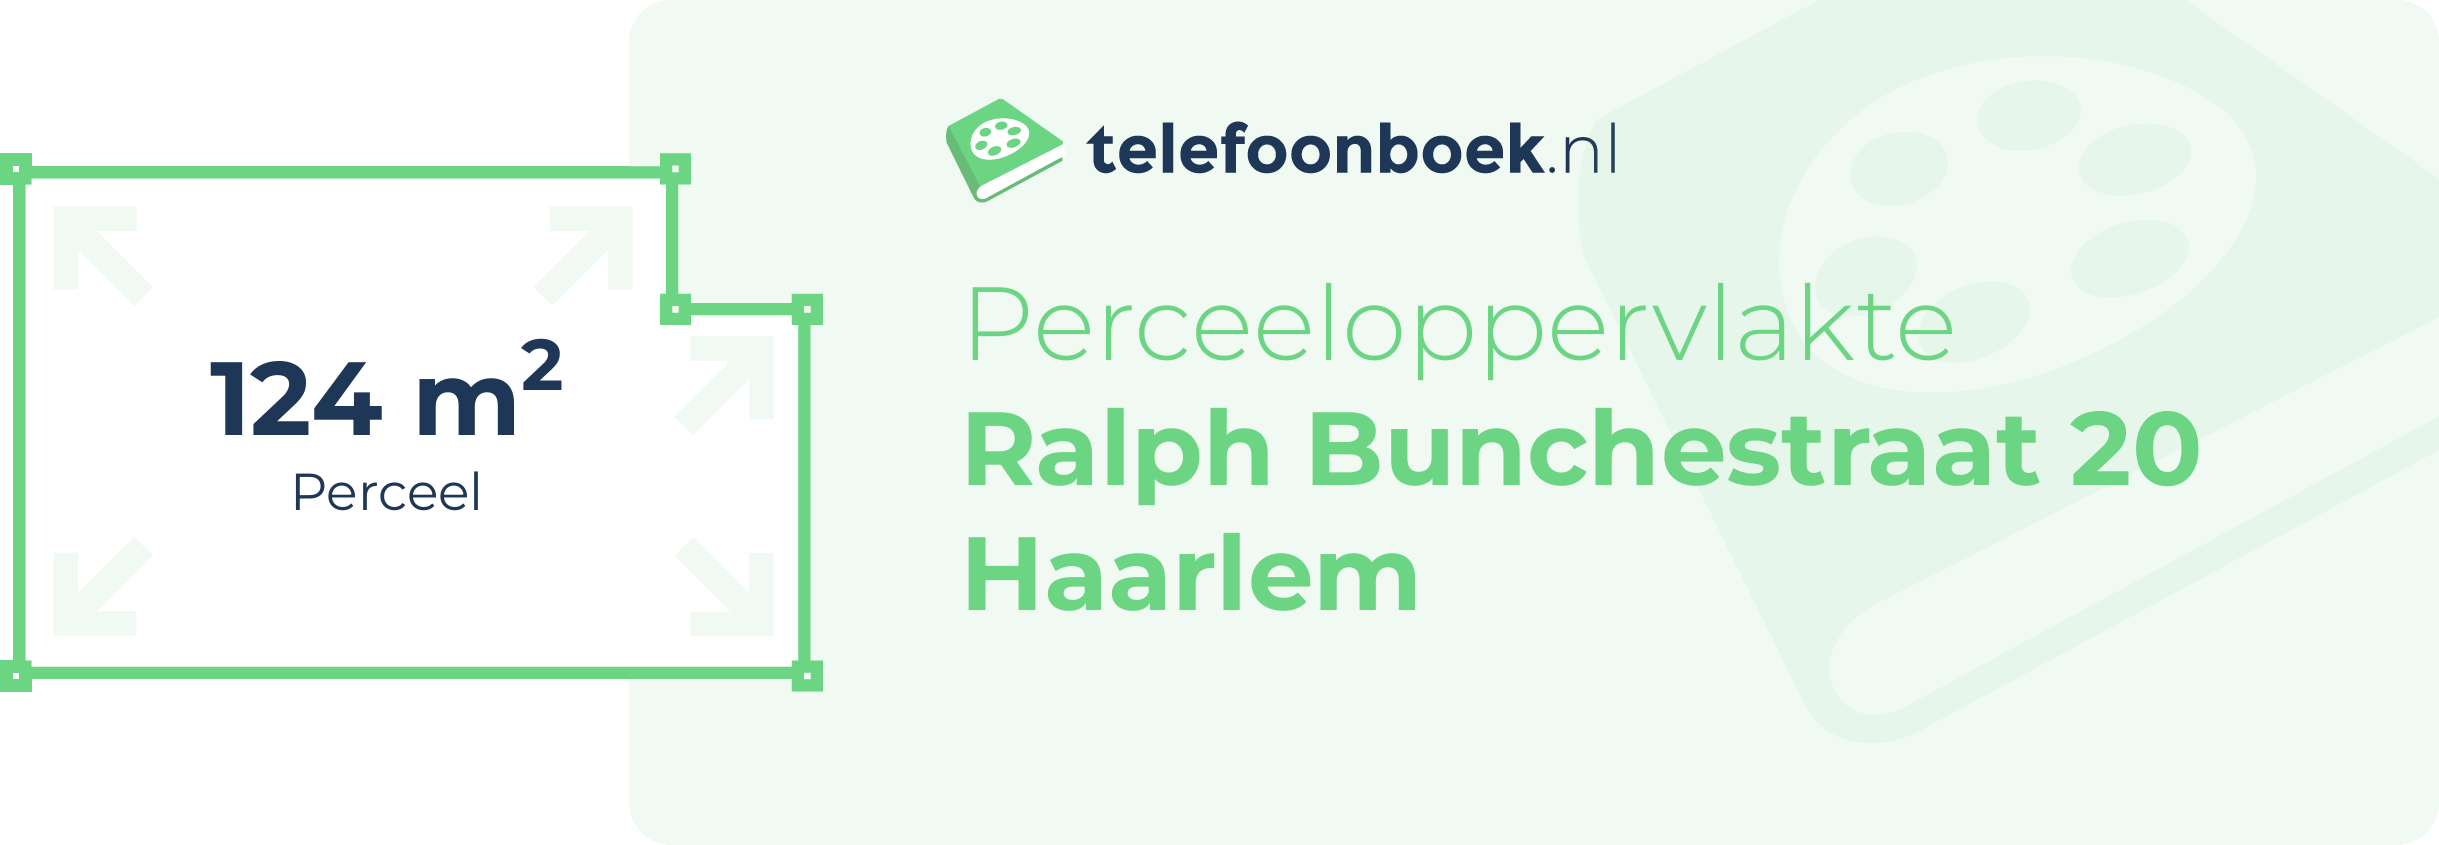 Perceeloppervlakte Ralph Bunchestraat 20 Haarlem